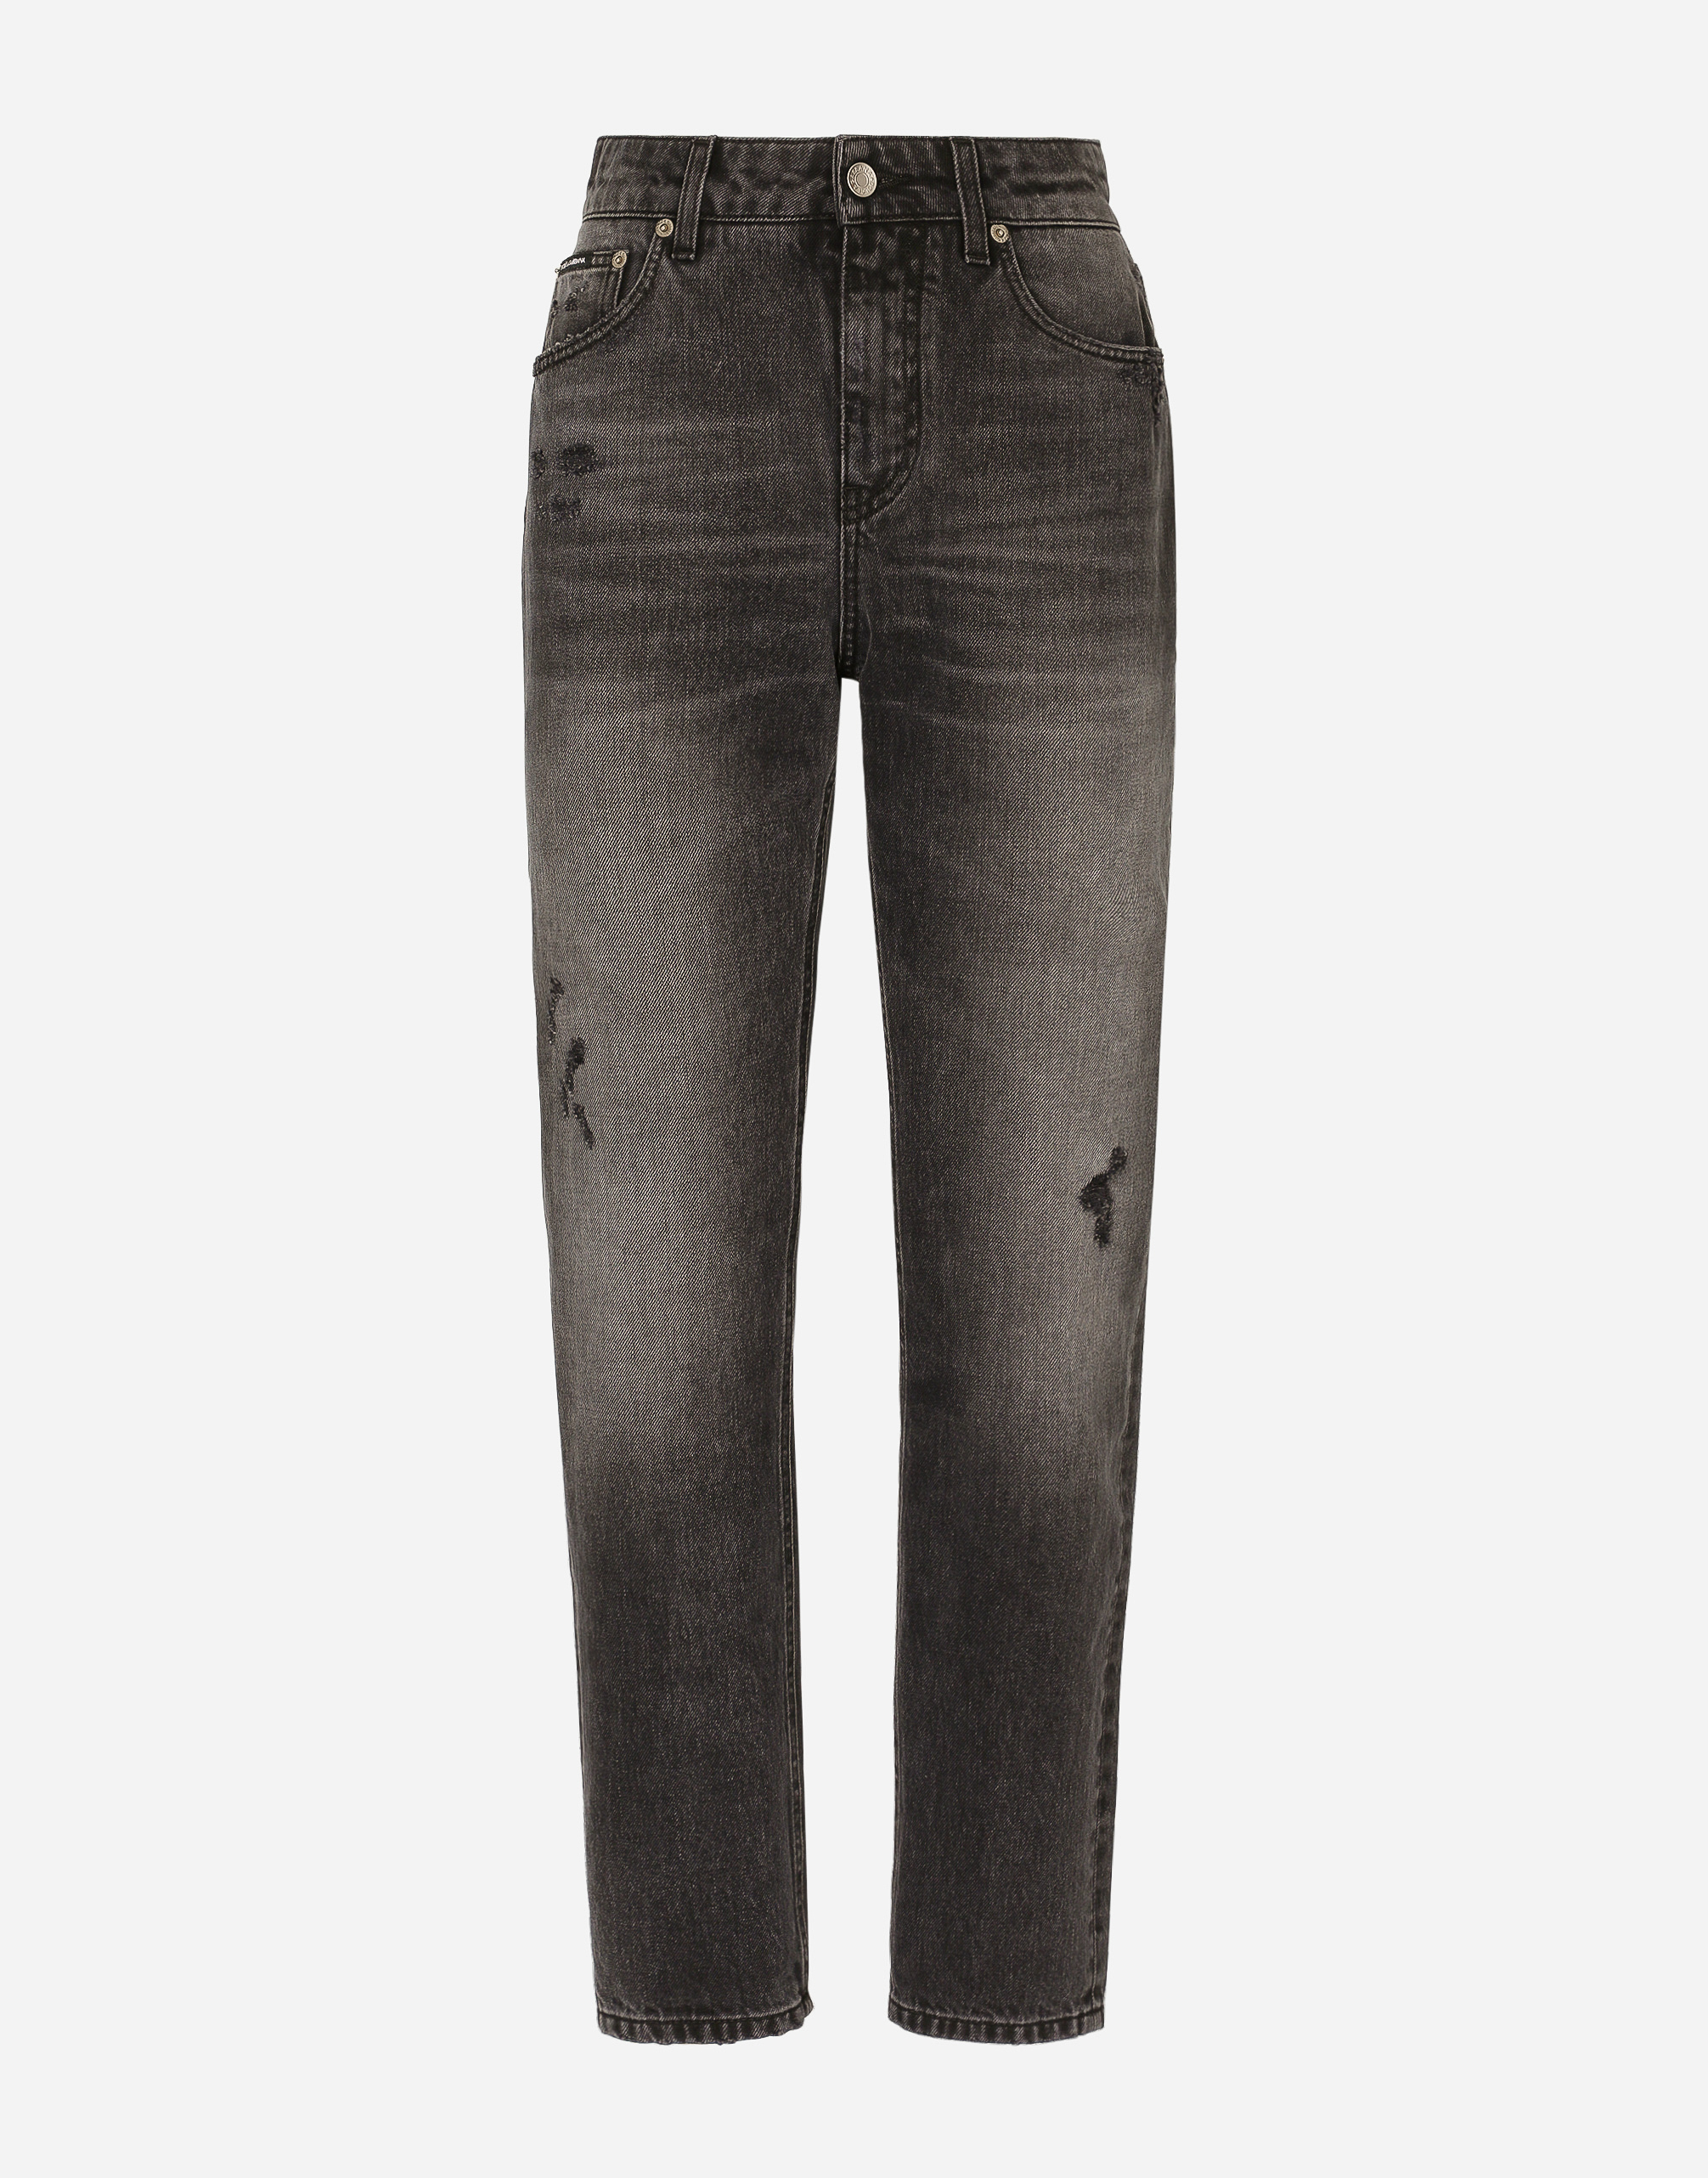 Jeans for Women | Dolce&Gabbana